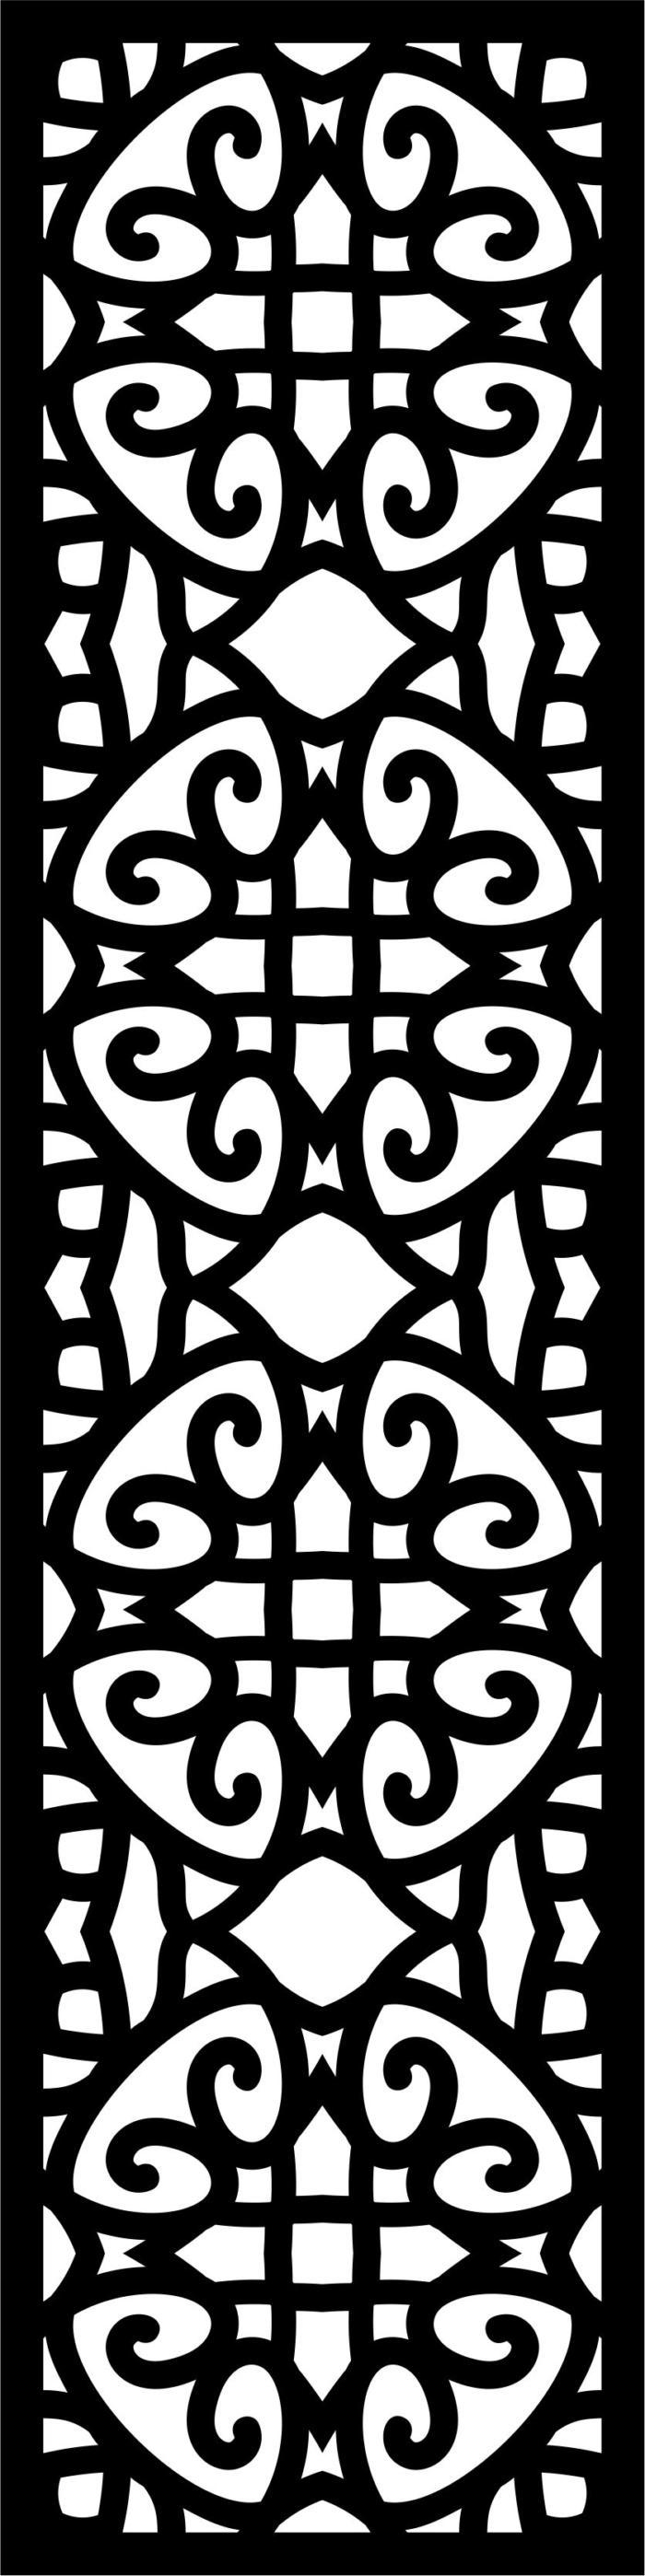 Panel Floral Lattice Stencil Room Divider Pattern Free DXF File